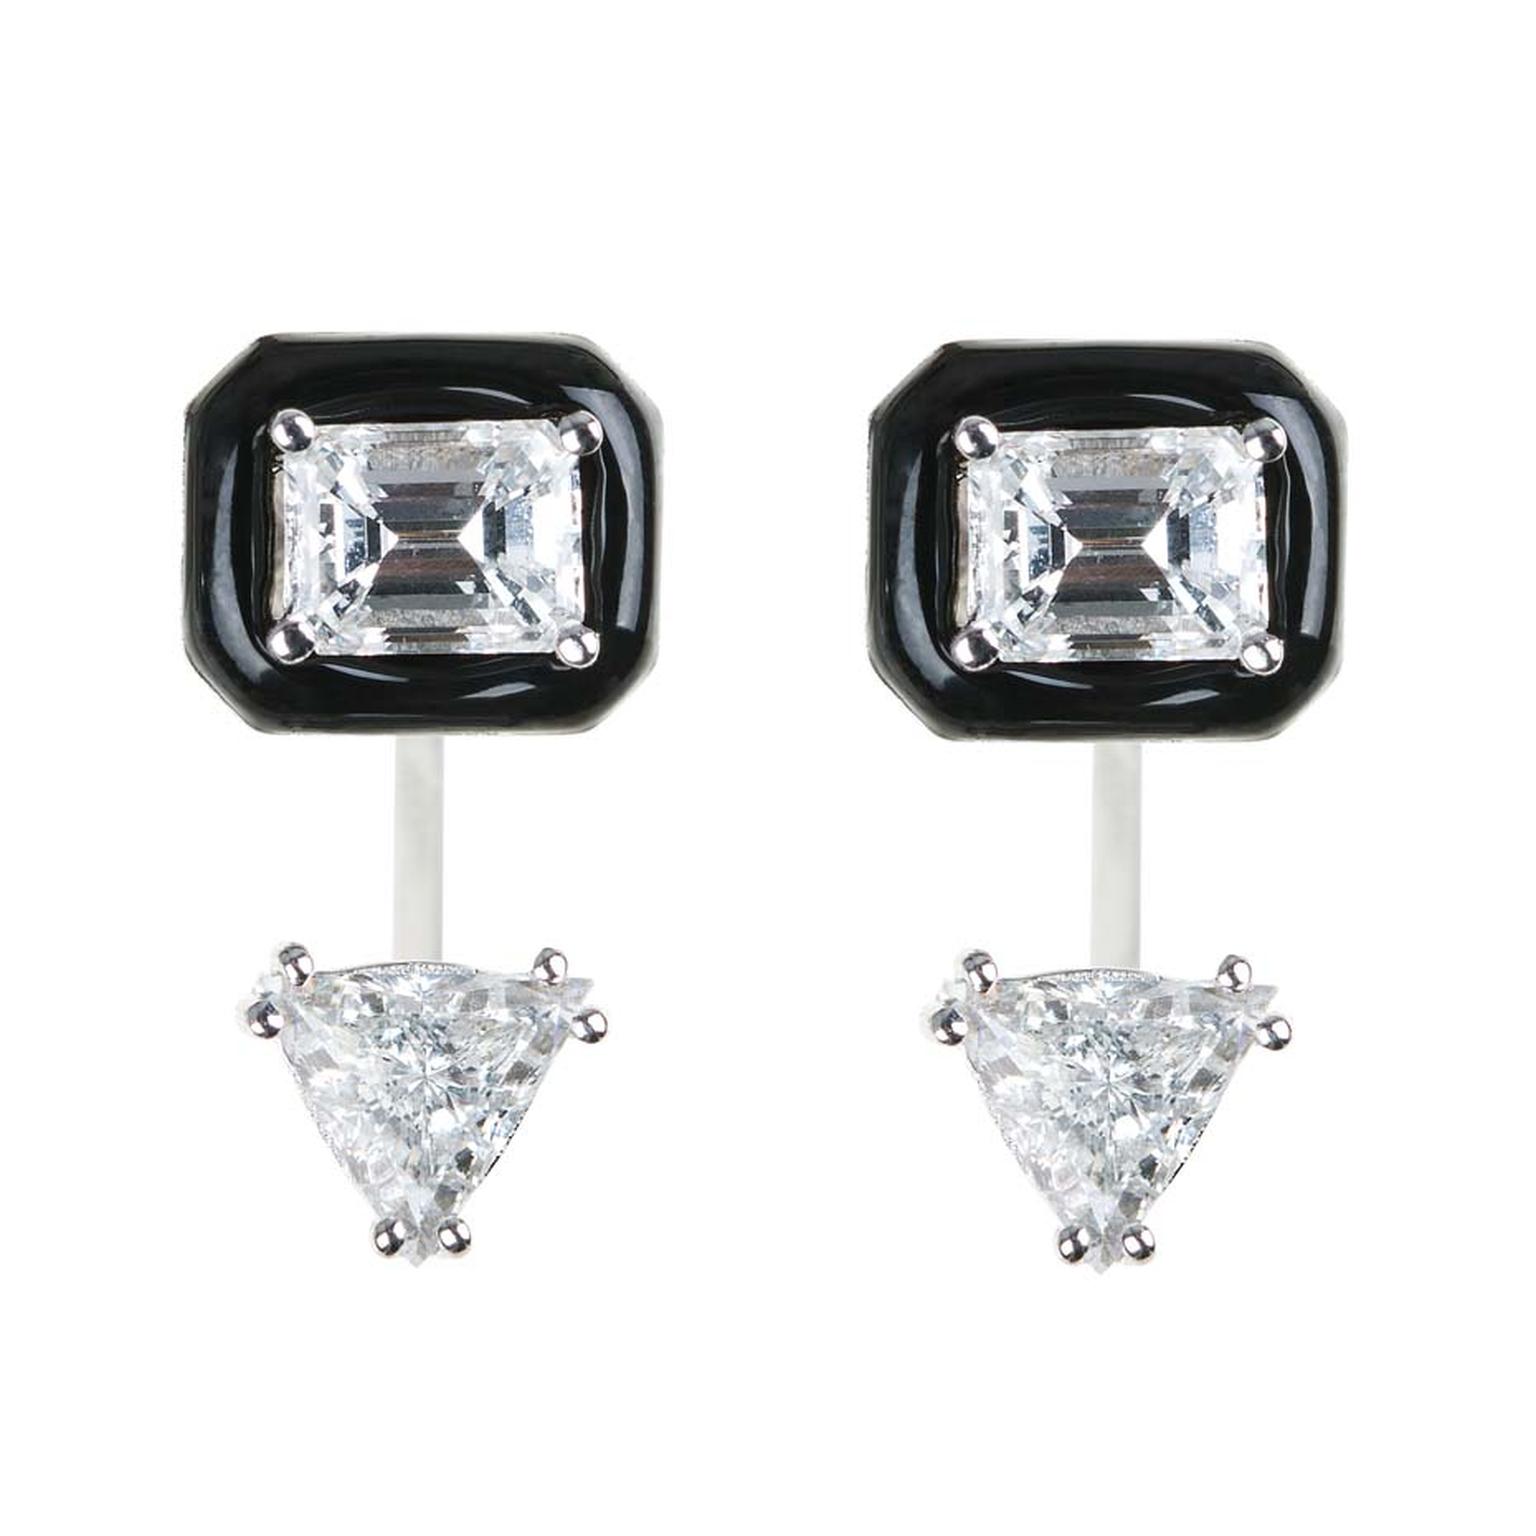 Nikos Koulis earrings featuring an emerald-cut diamond surrounded by black enamel with triangle-cut drop diamonds.